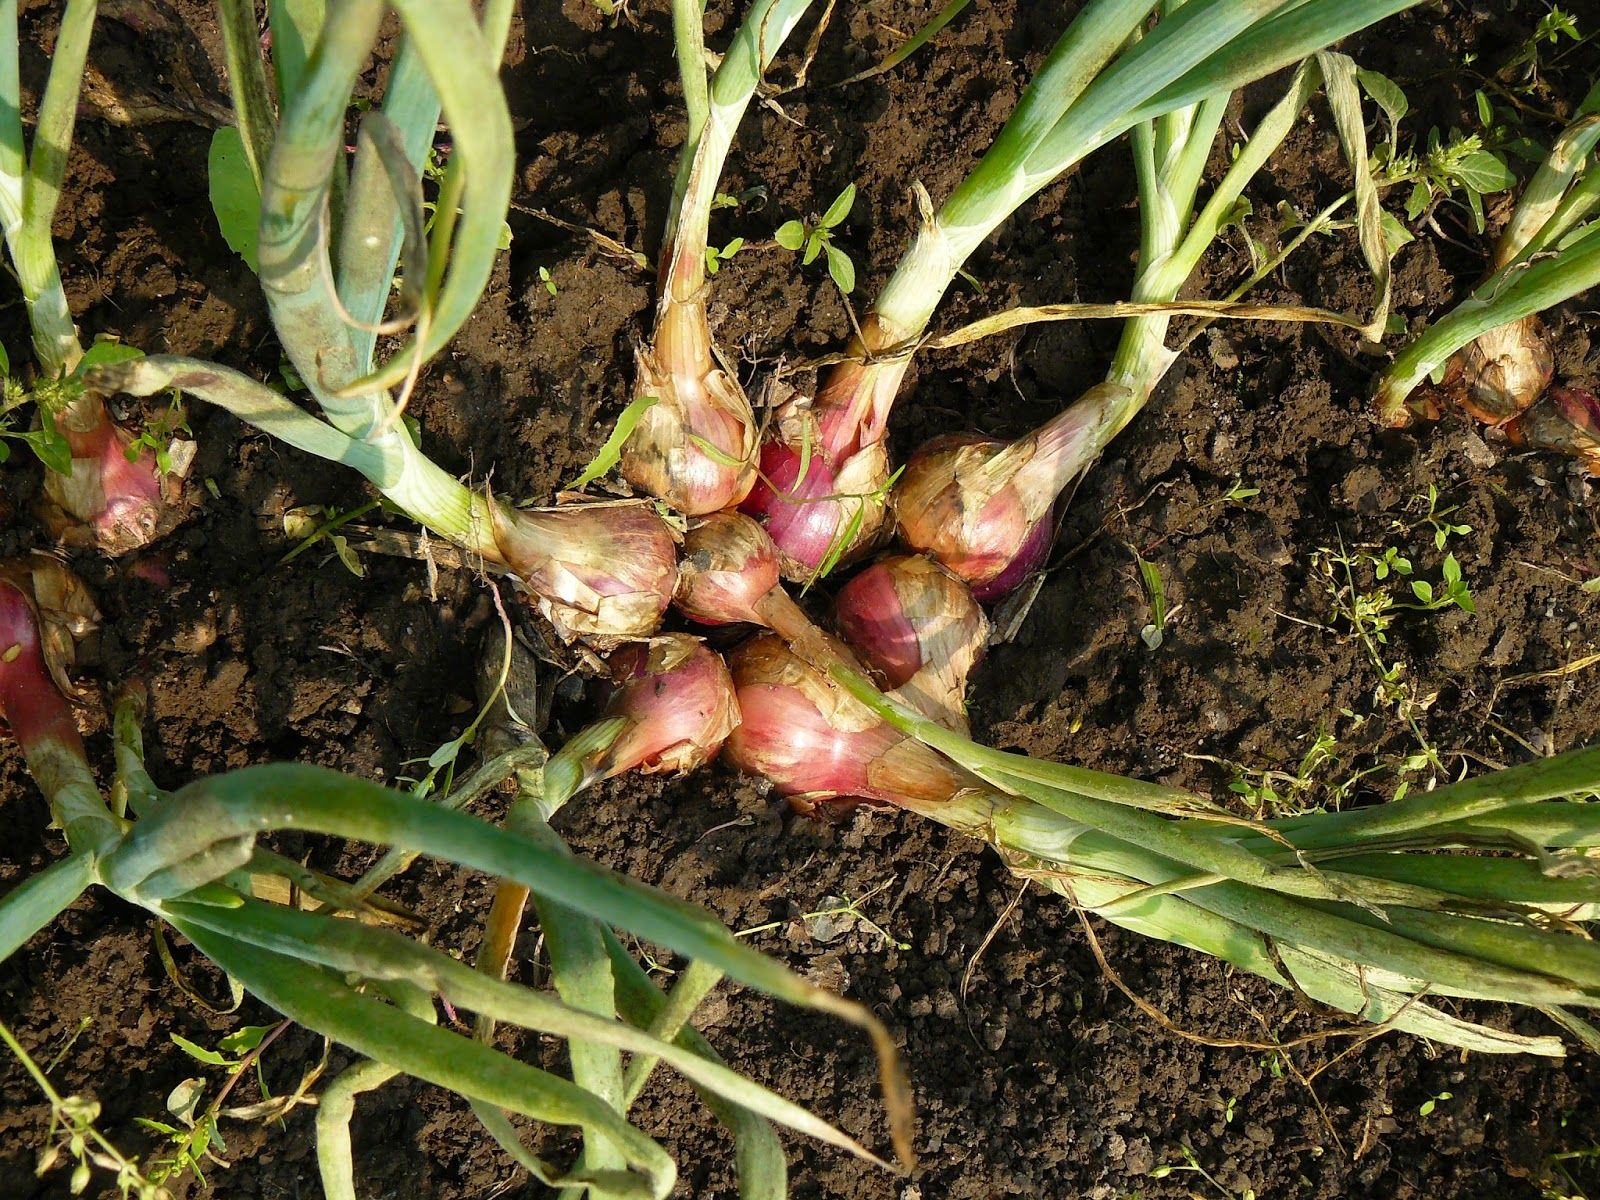 Лук-шалот: выращивание из семян, посадка и уход в открытом грунте, фото